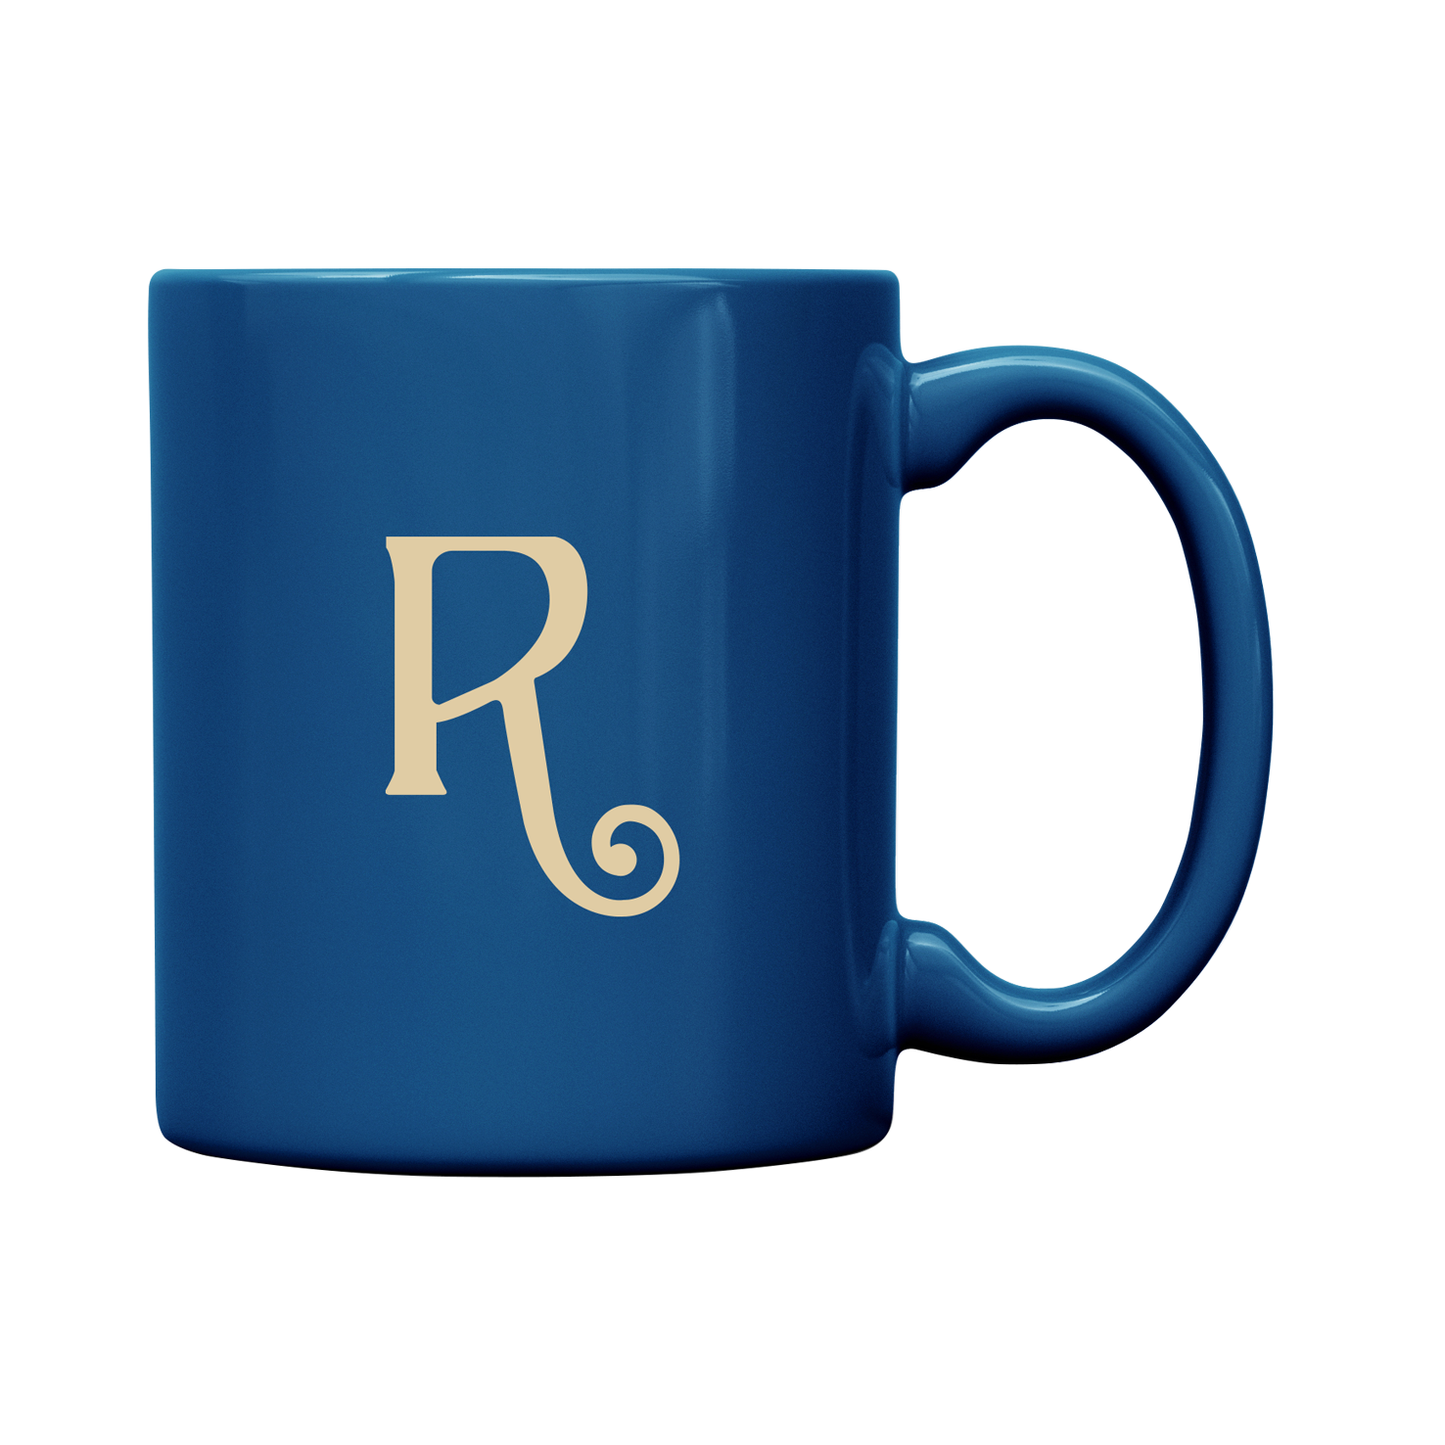 Ravenclaw™ Mug